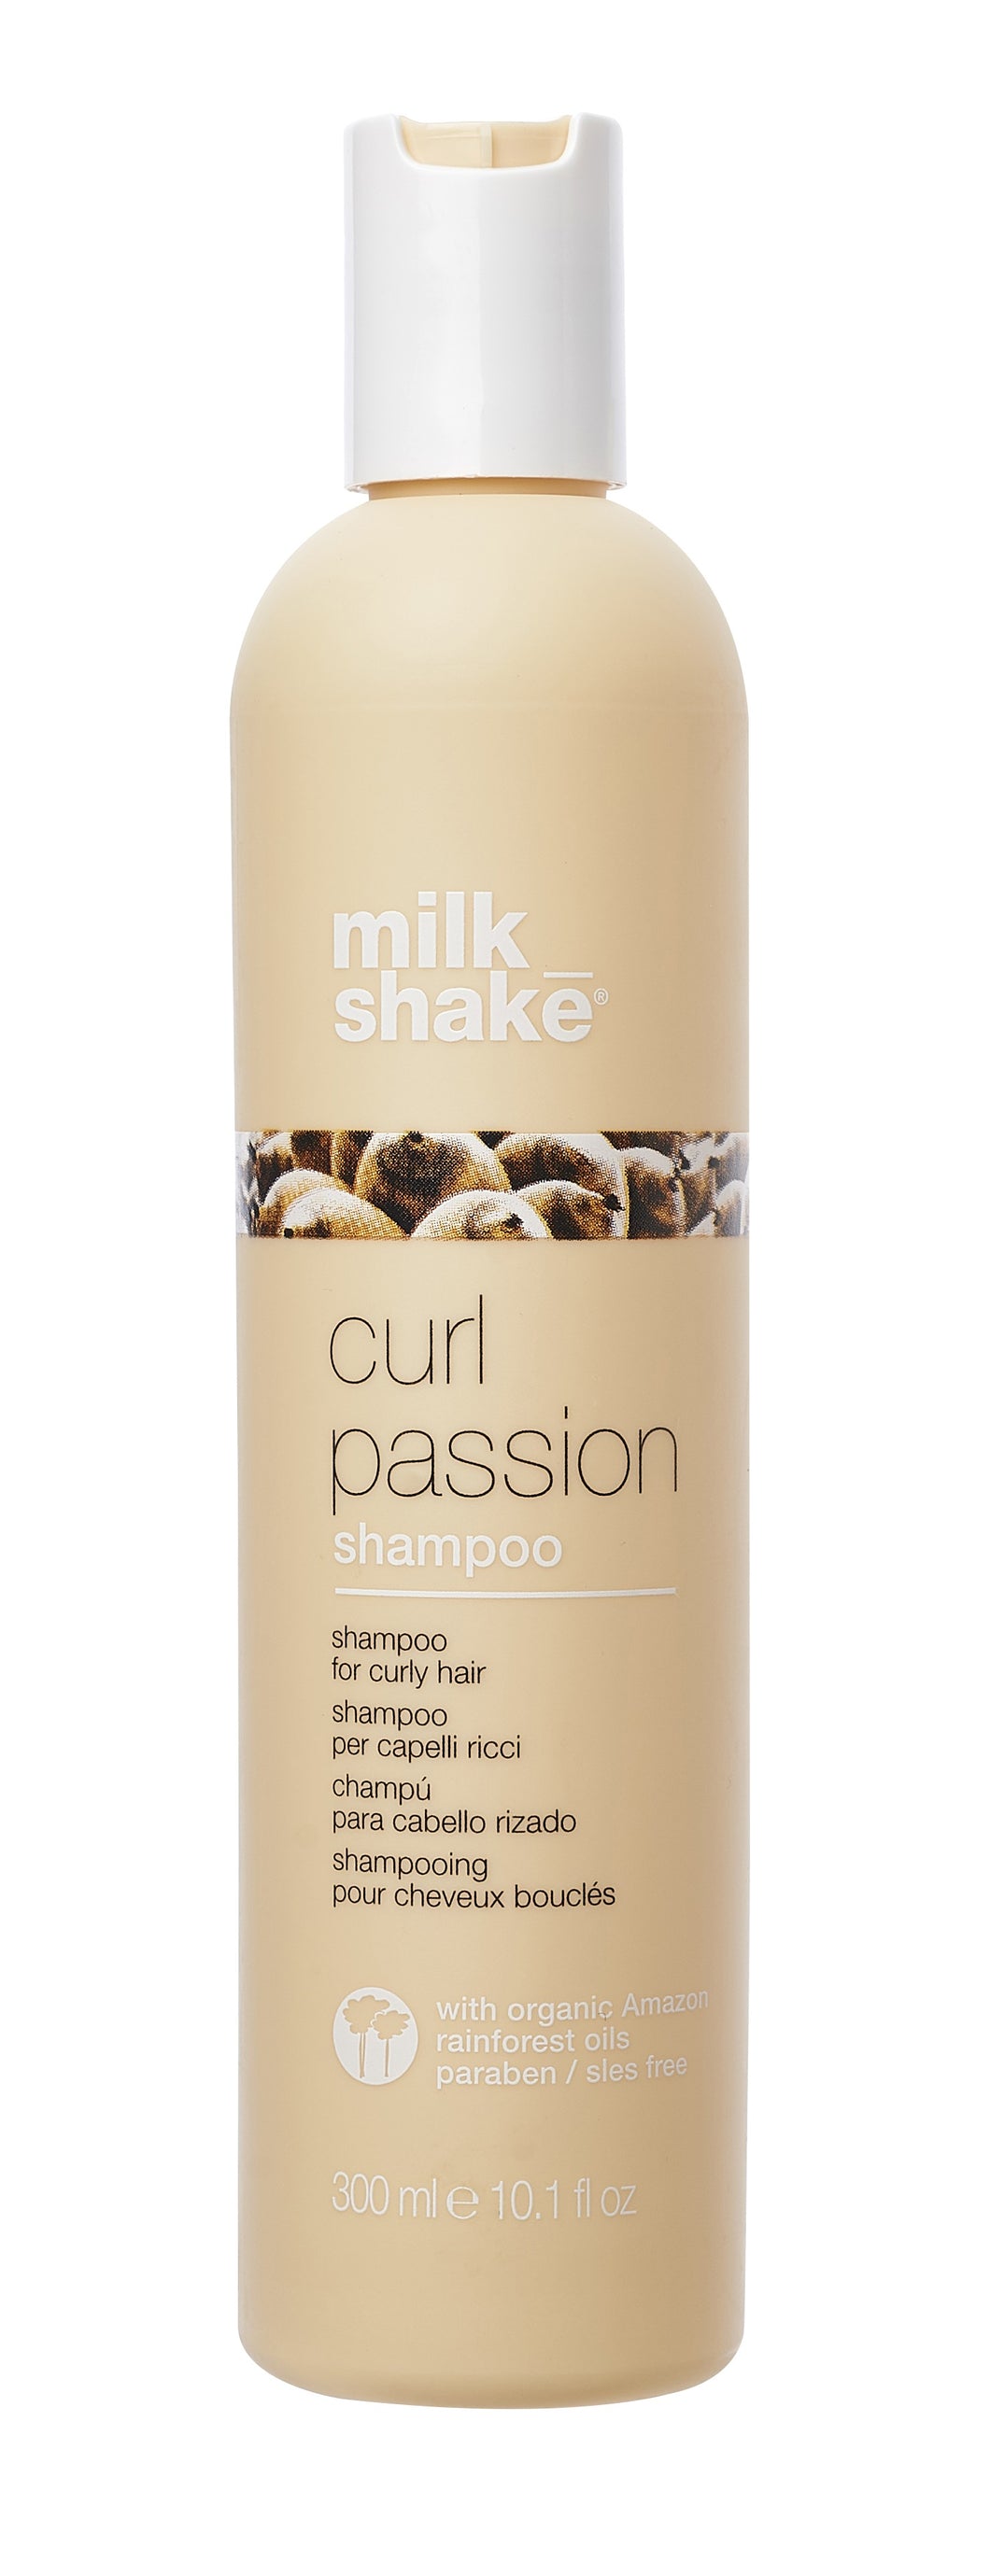 milk shake curl passion szampon